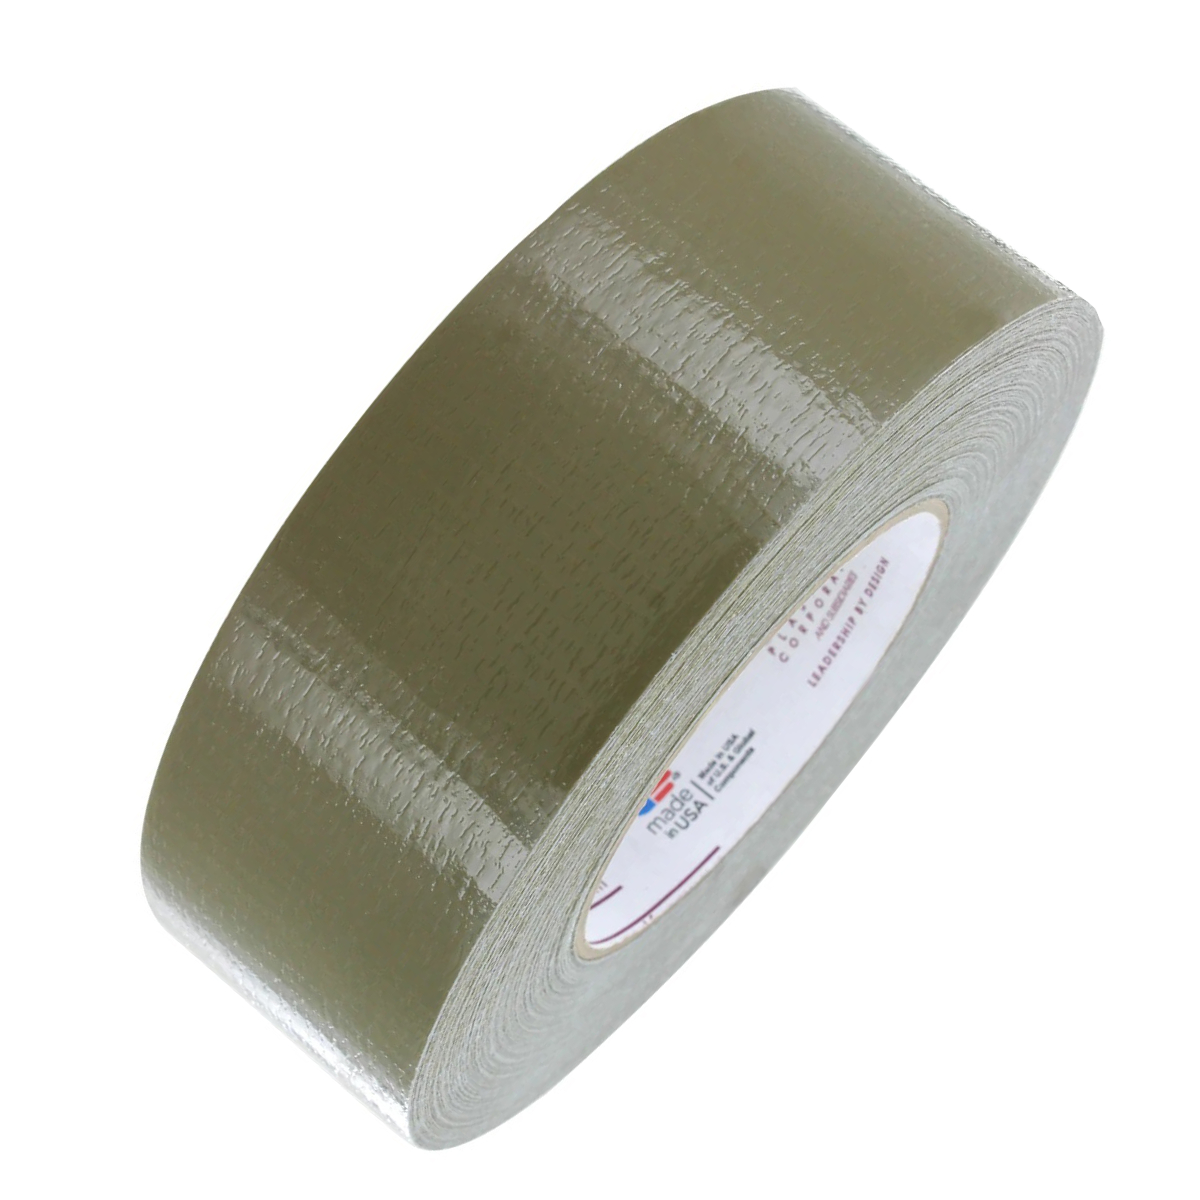 BERRY GLOBAL INC. Lepící páska Duct Tape voděodolná 55m x 48mm US Olive Drab originál